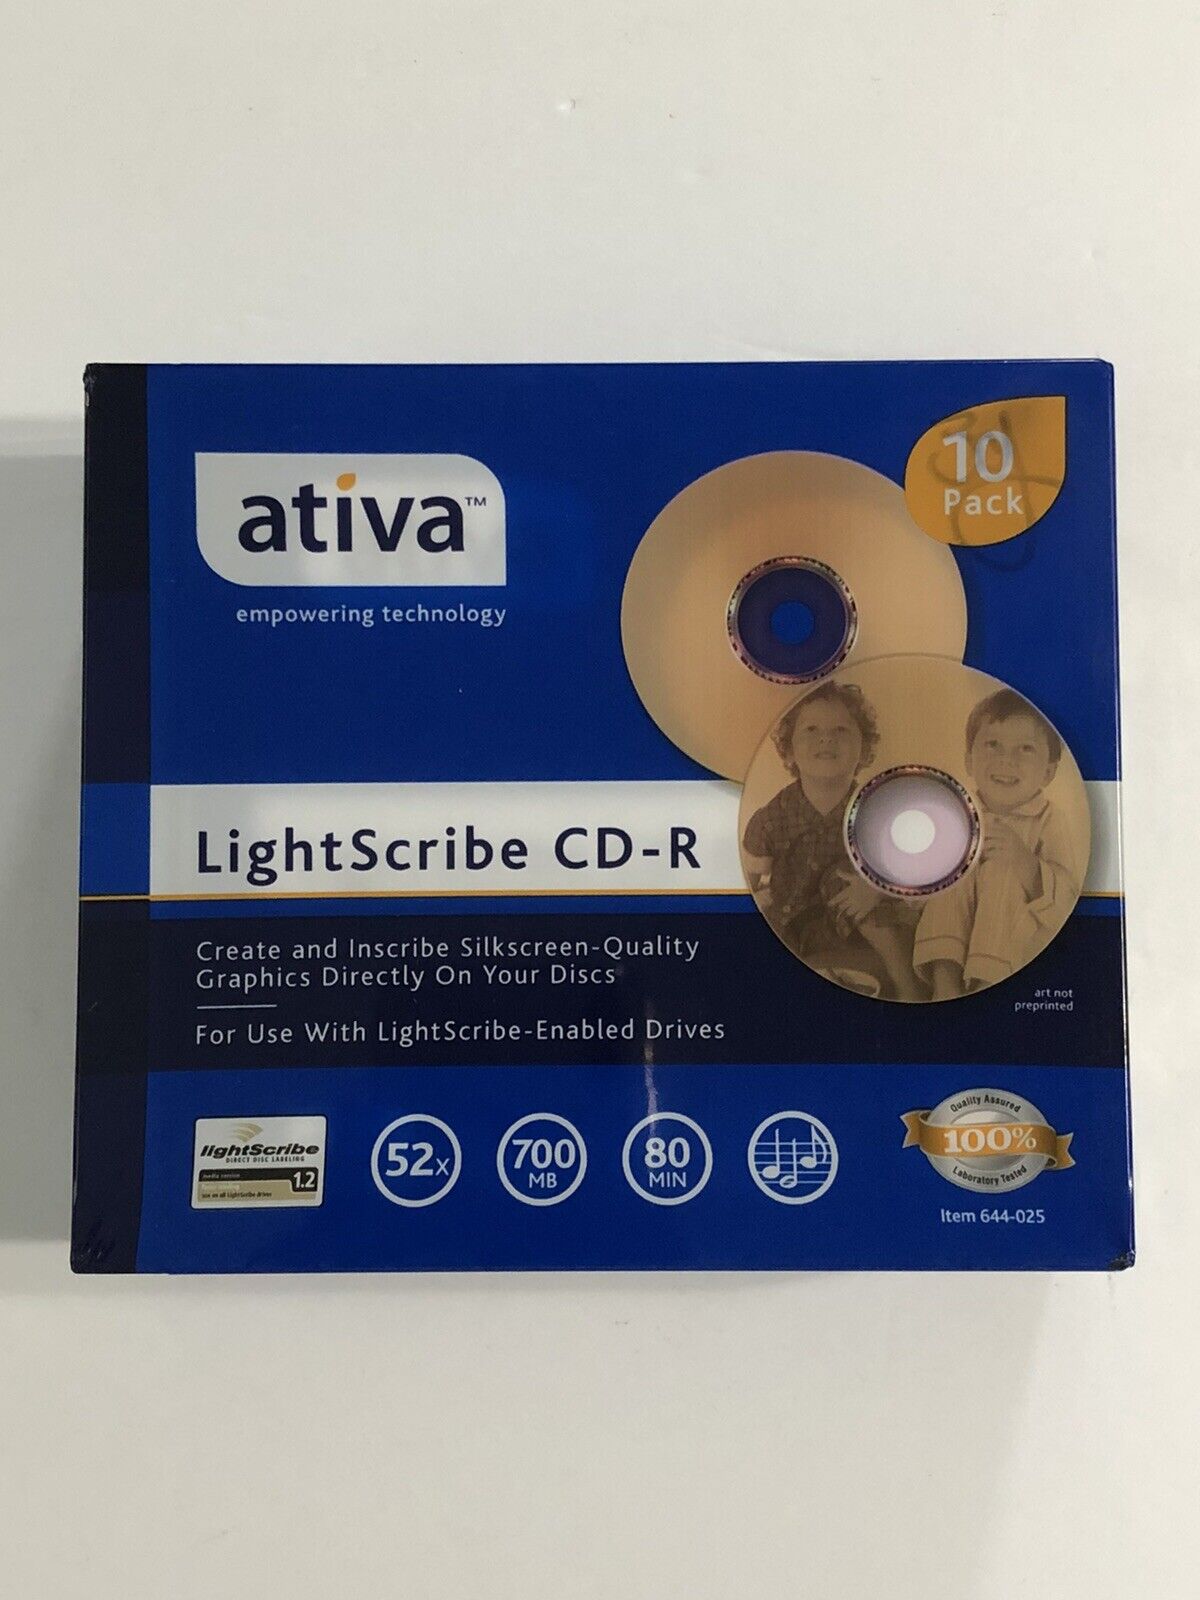 Blank CD  in Jewel Cases Ativa Lightscribe CD-R (10 Pack) 52X 700MB 80 Min New